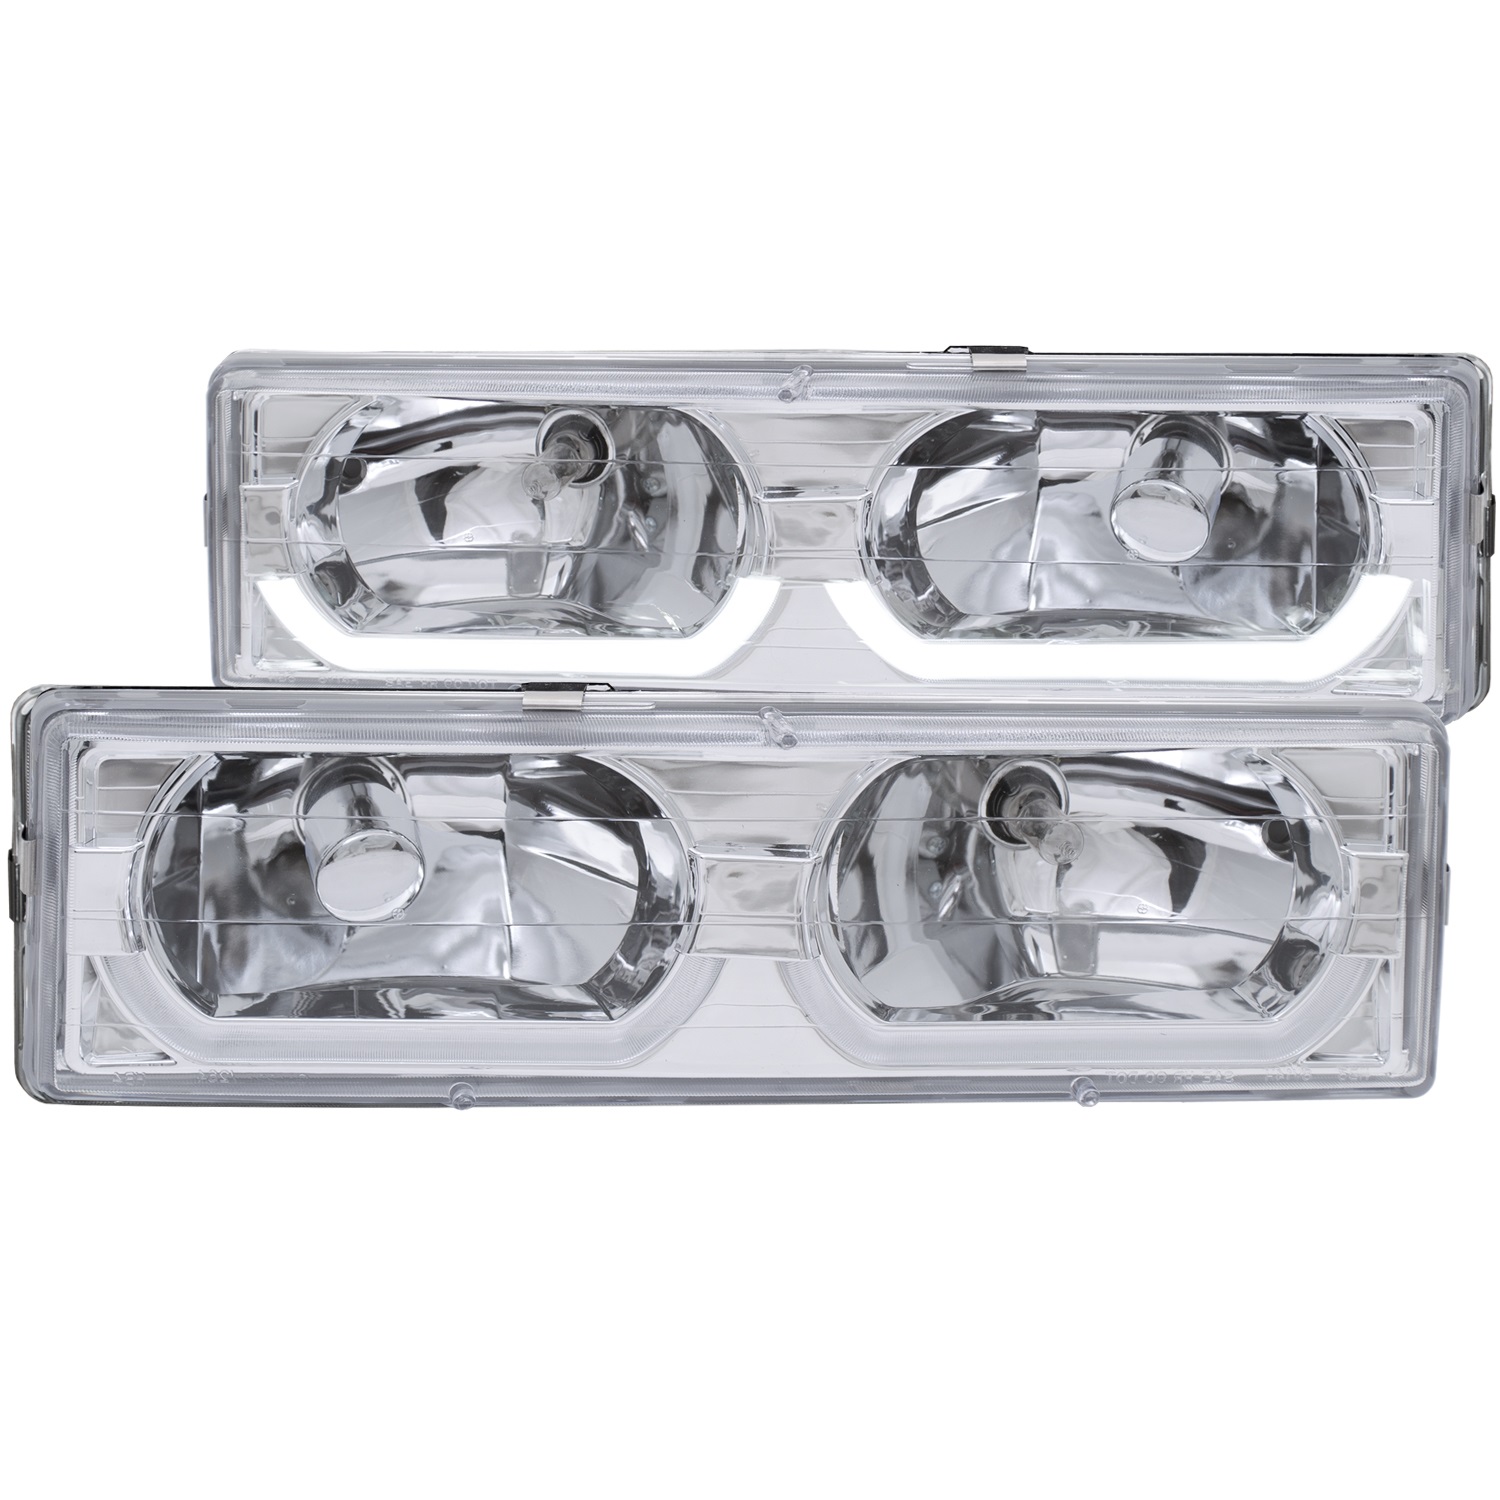 AnzoUSA 111300 Crystal Headlight Set